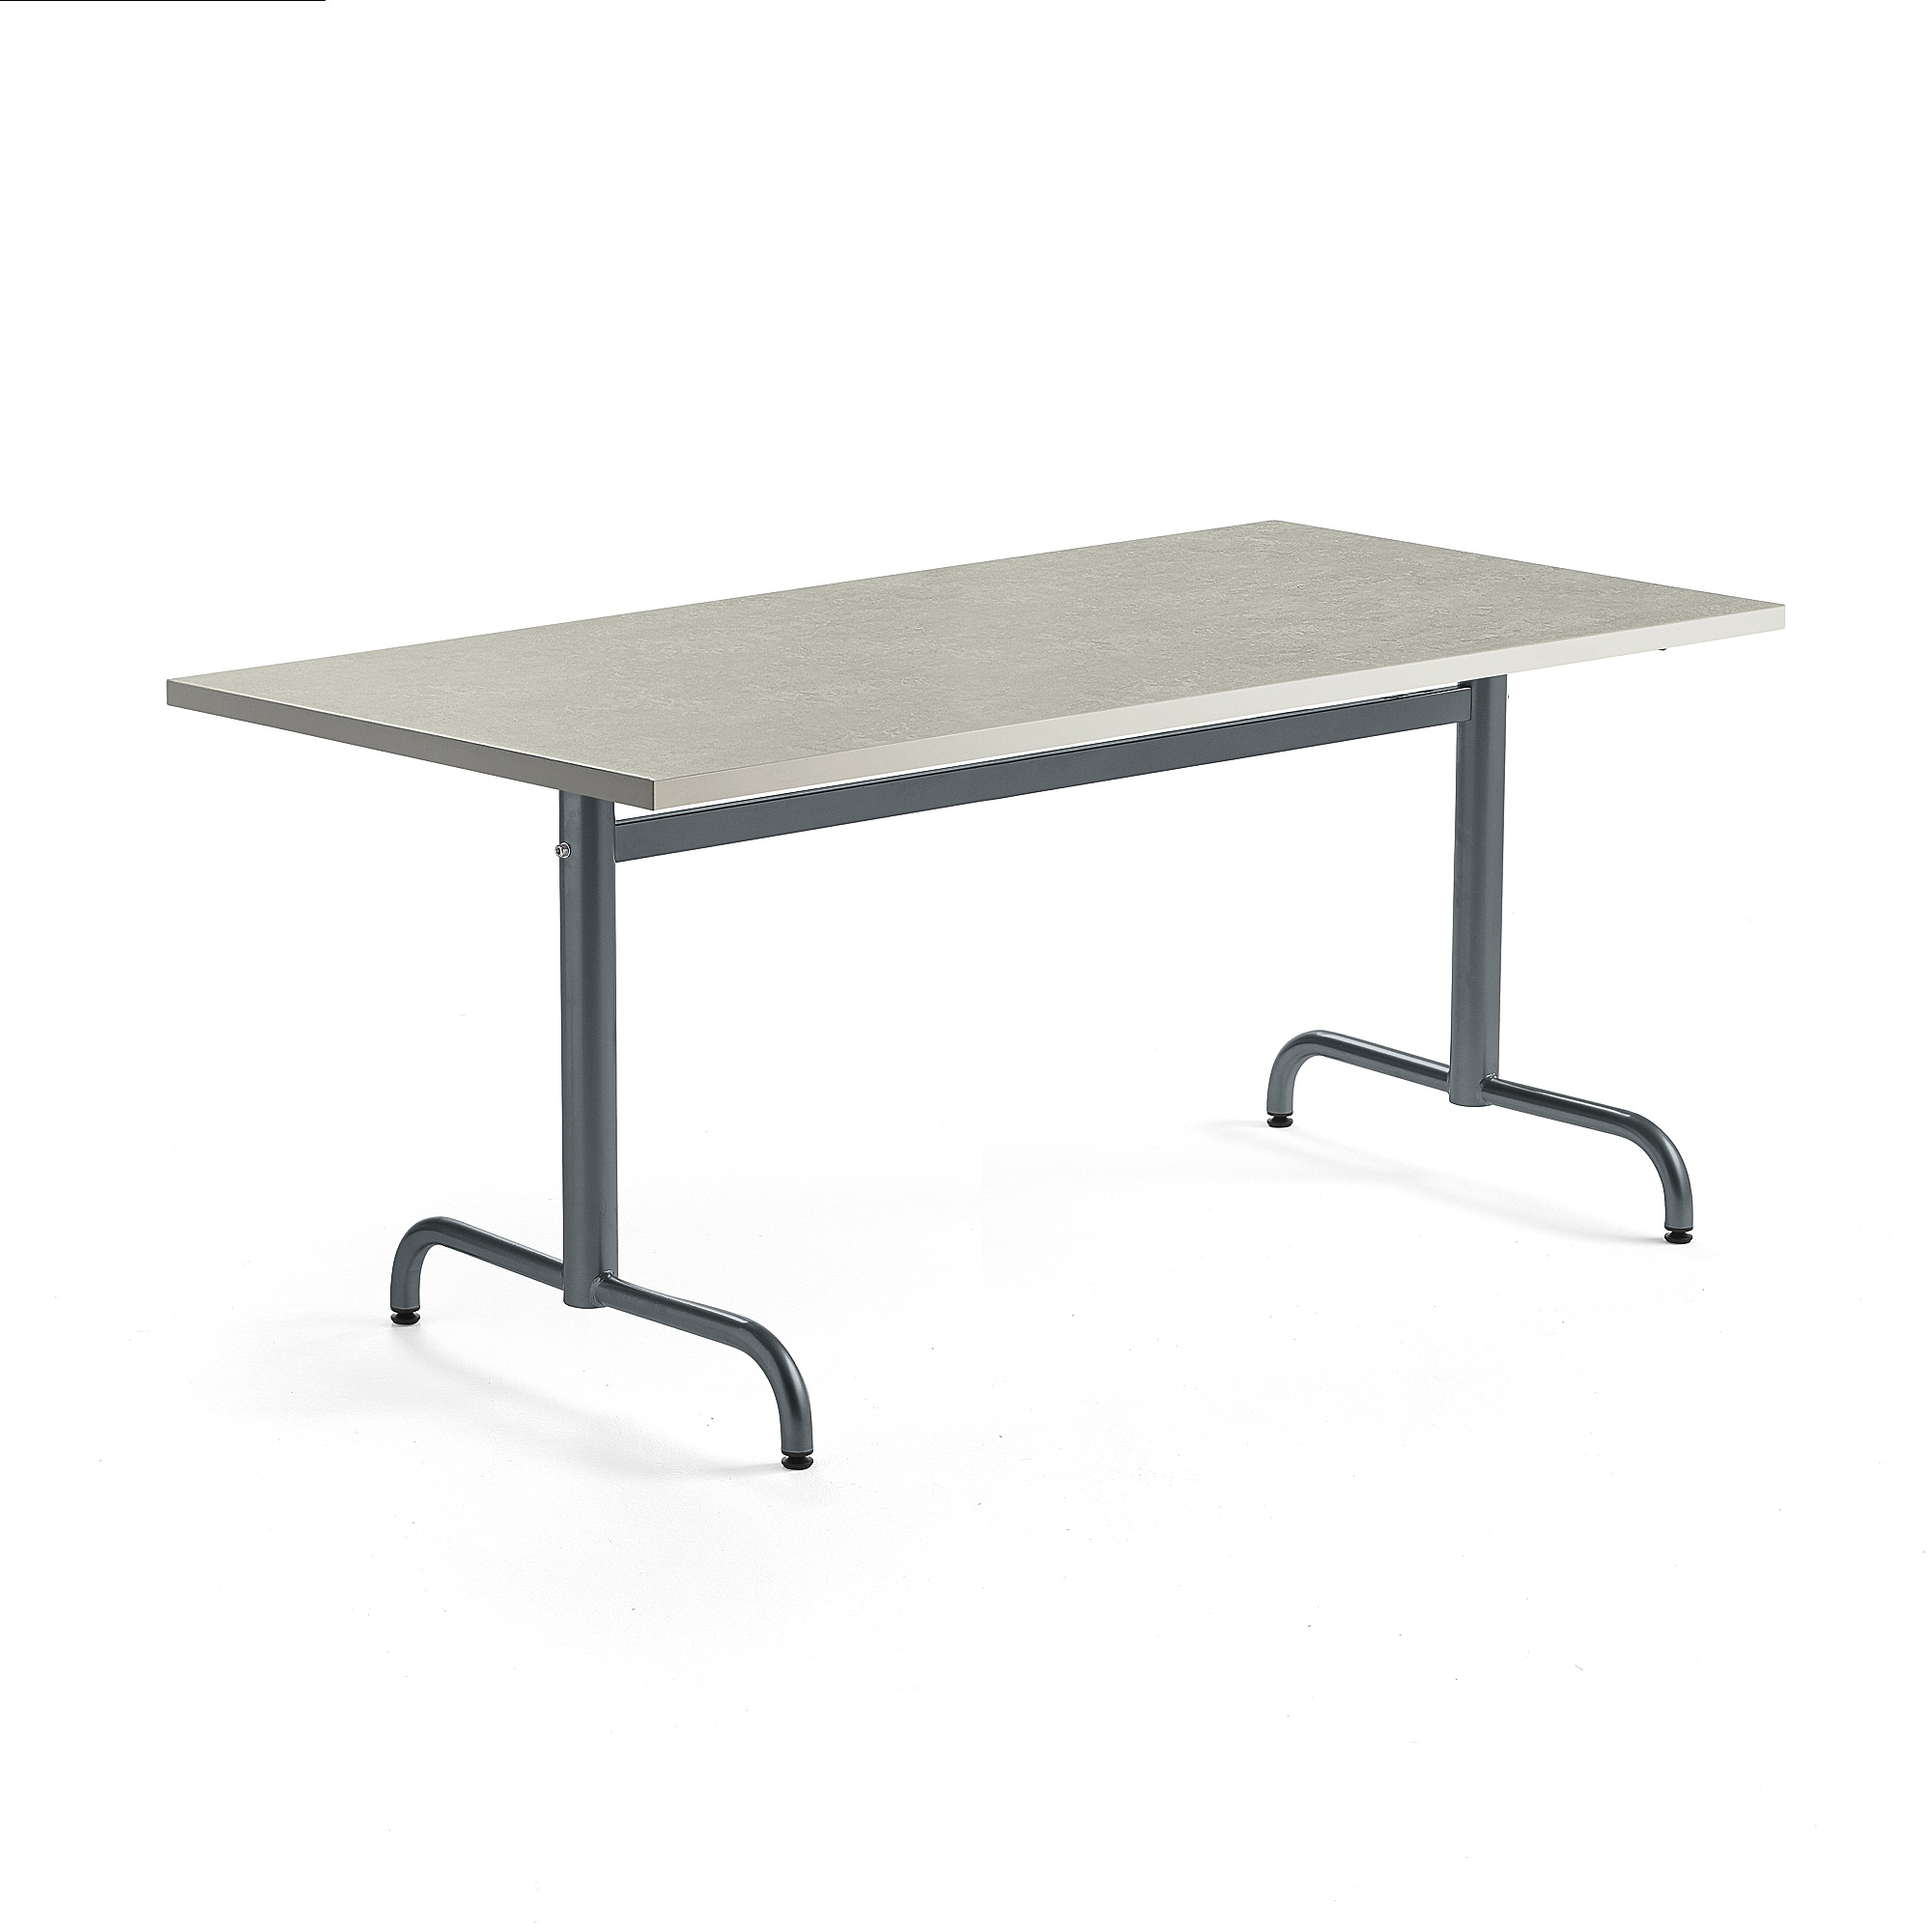 Stůl PLURAL, 1400x800x720 mm, linoleum, šedá, antracitově šedá